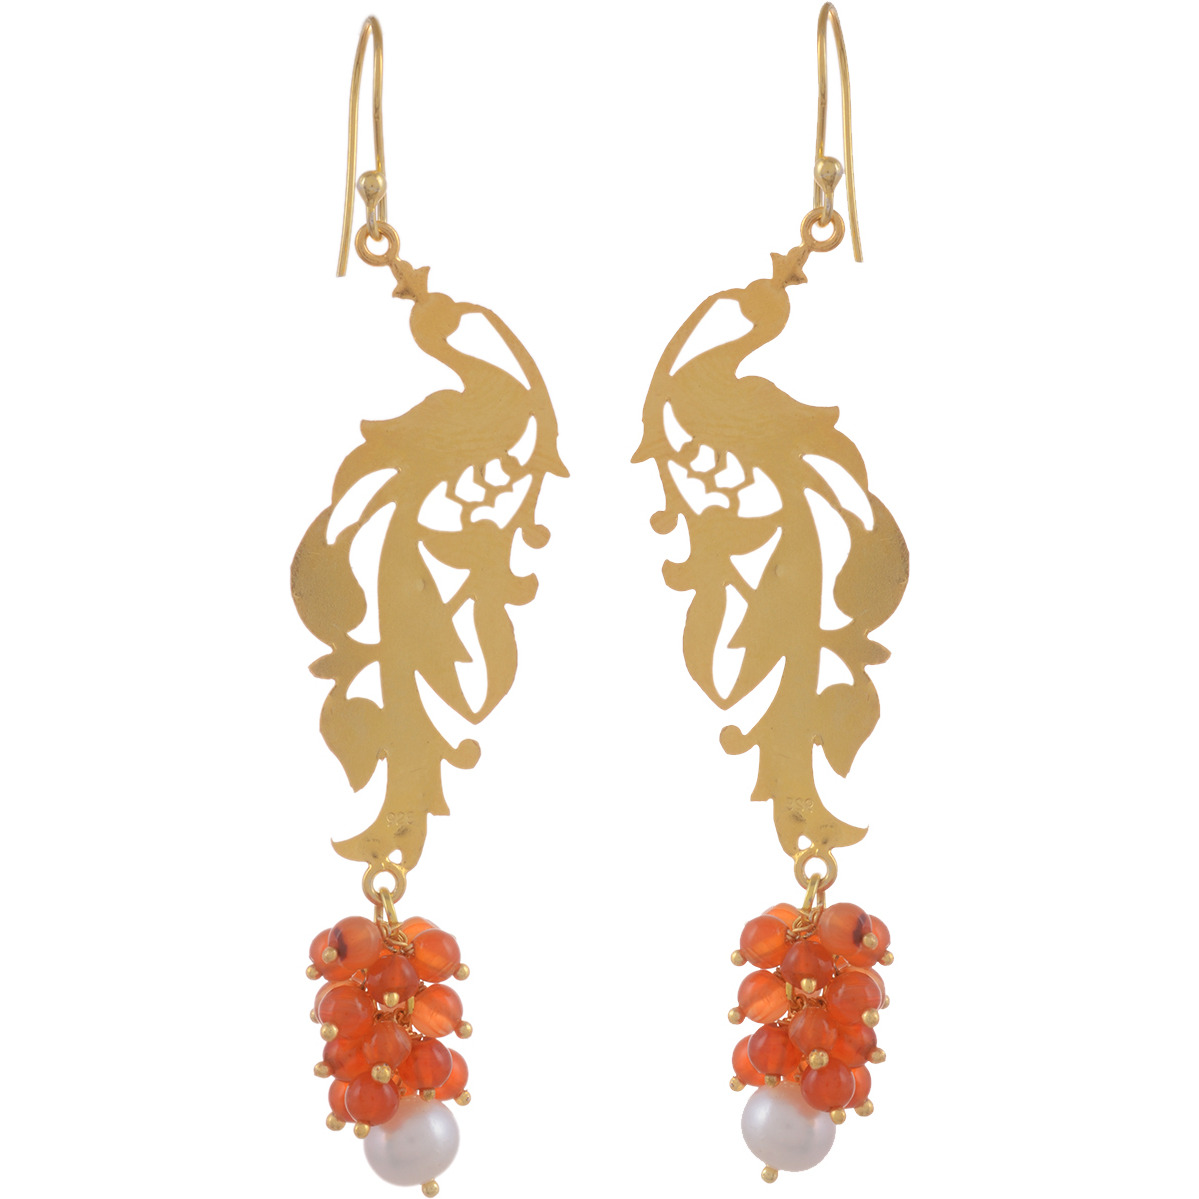 Beautiful Design, Orange Beads, Gold Plated Drop Earrings By Silvermerc Designs